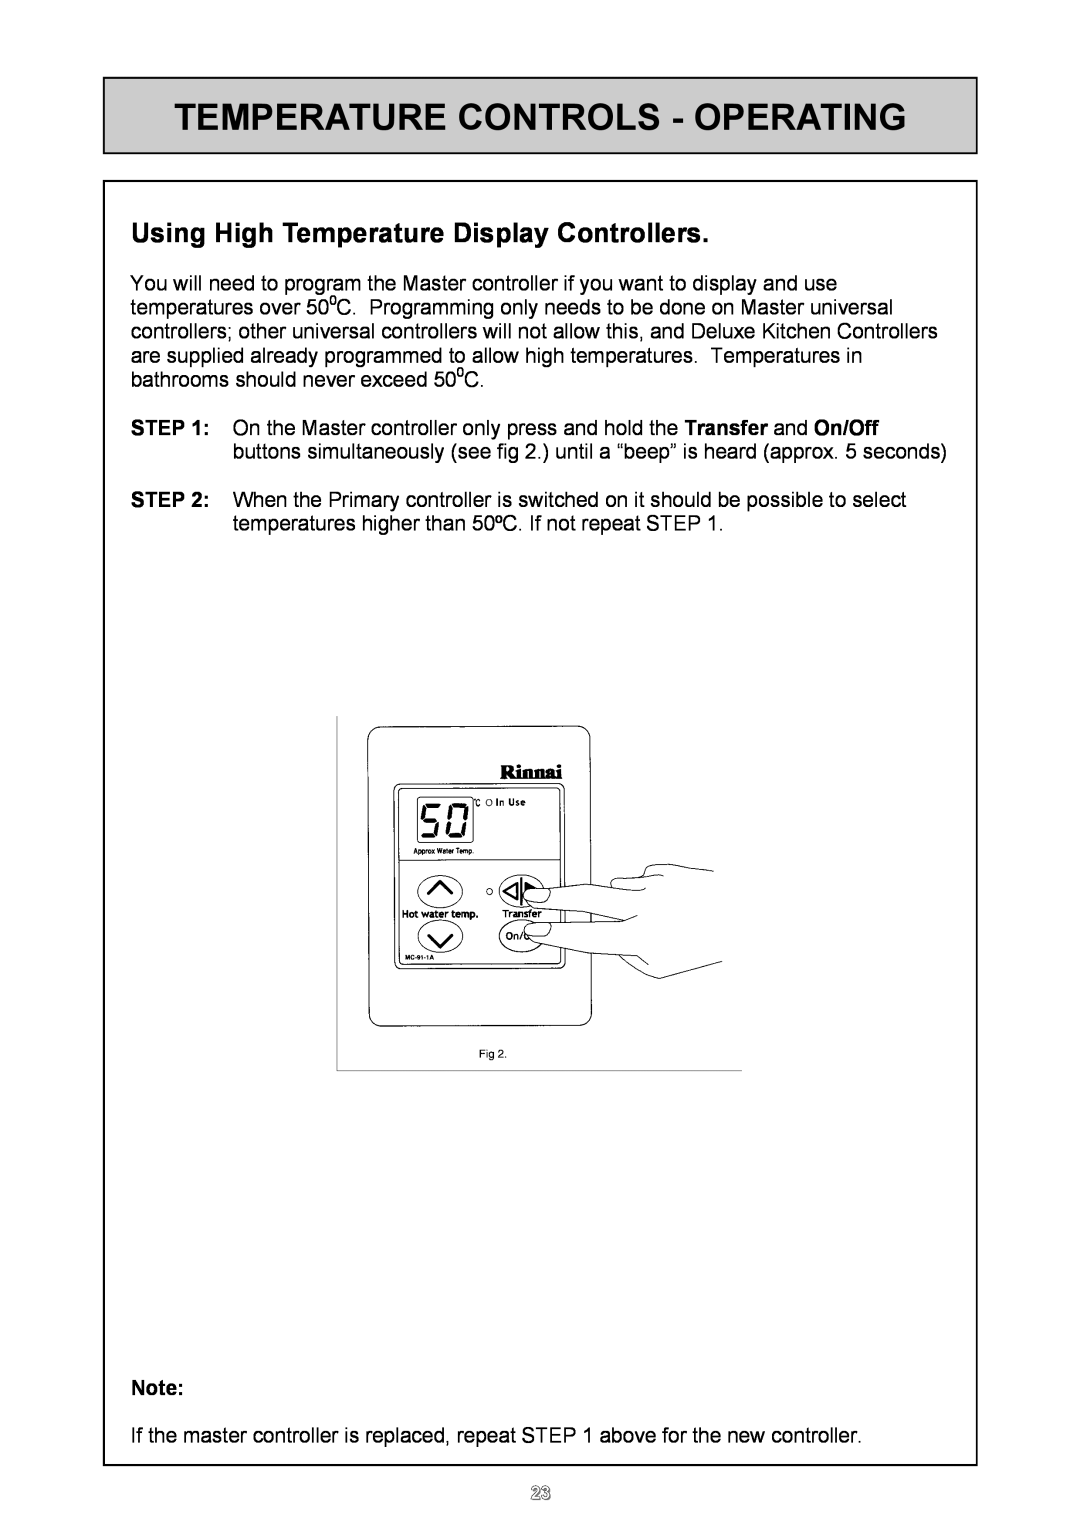 Rinnai 24e user manual Using High Temperature Display Controllers, Temperature Controls - Operating 